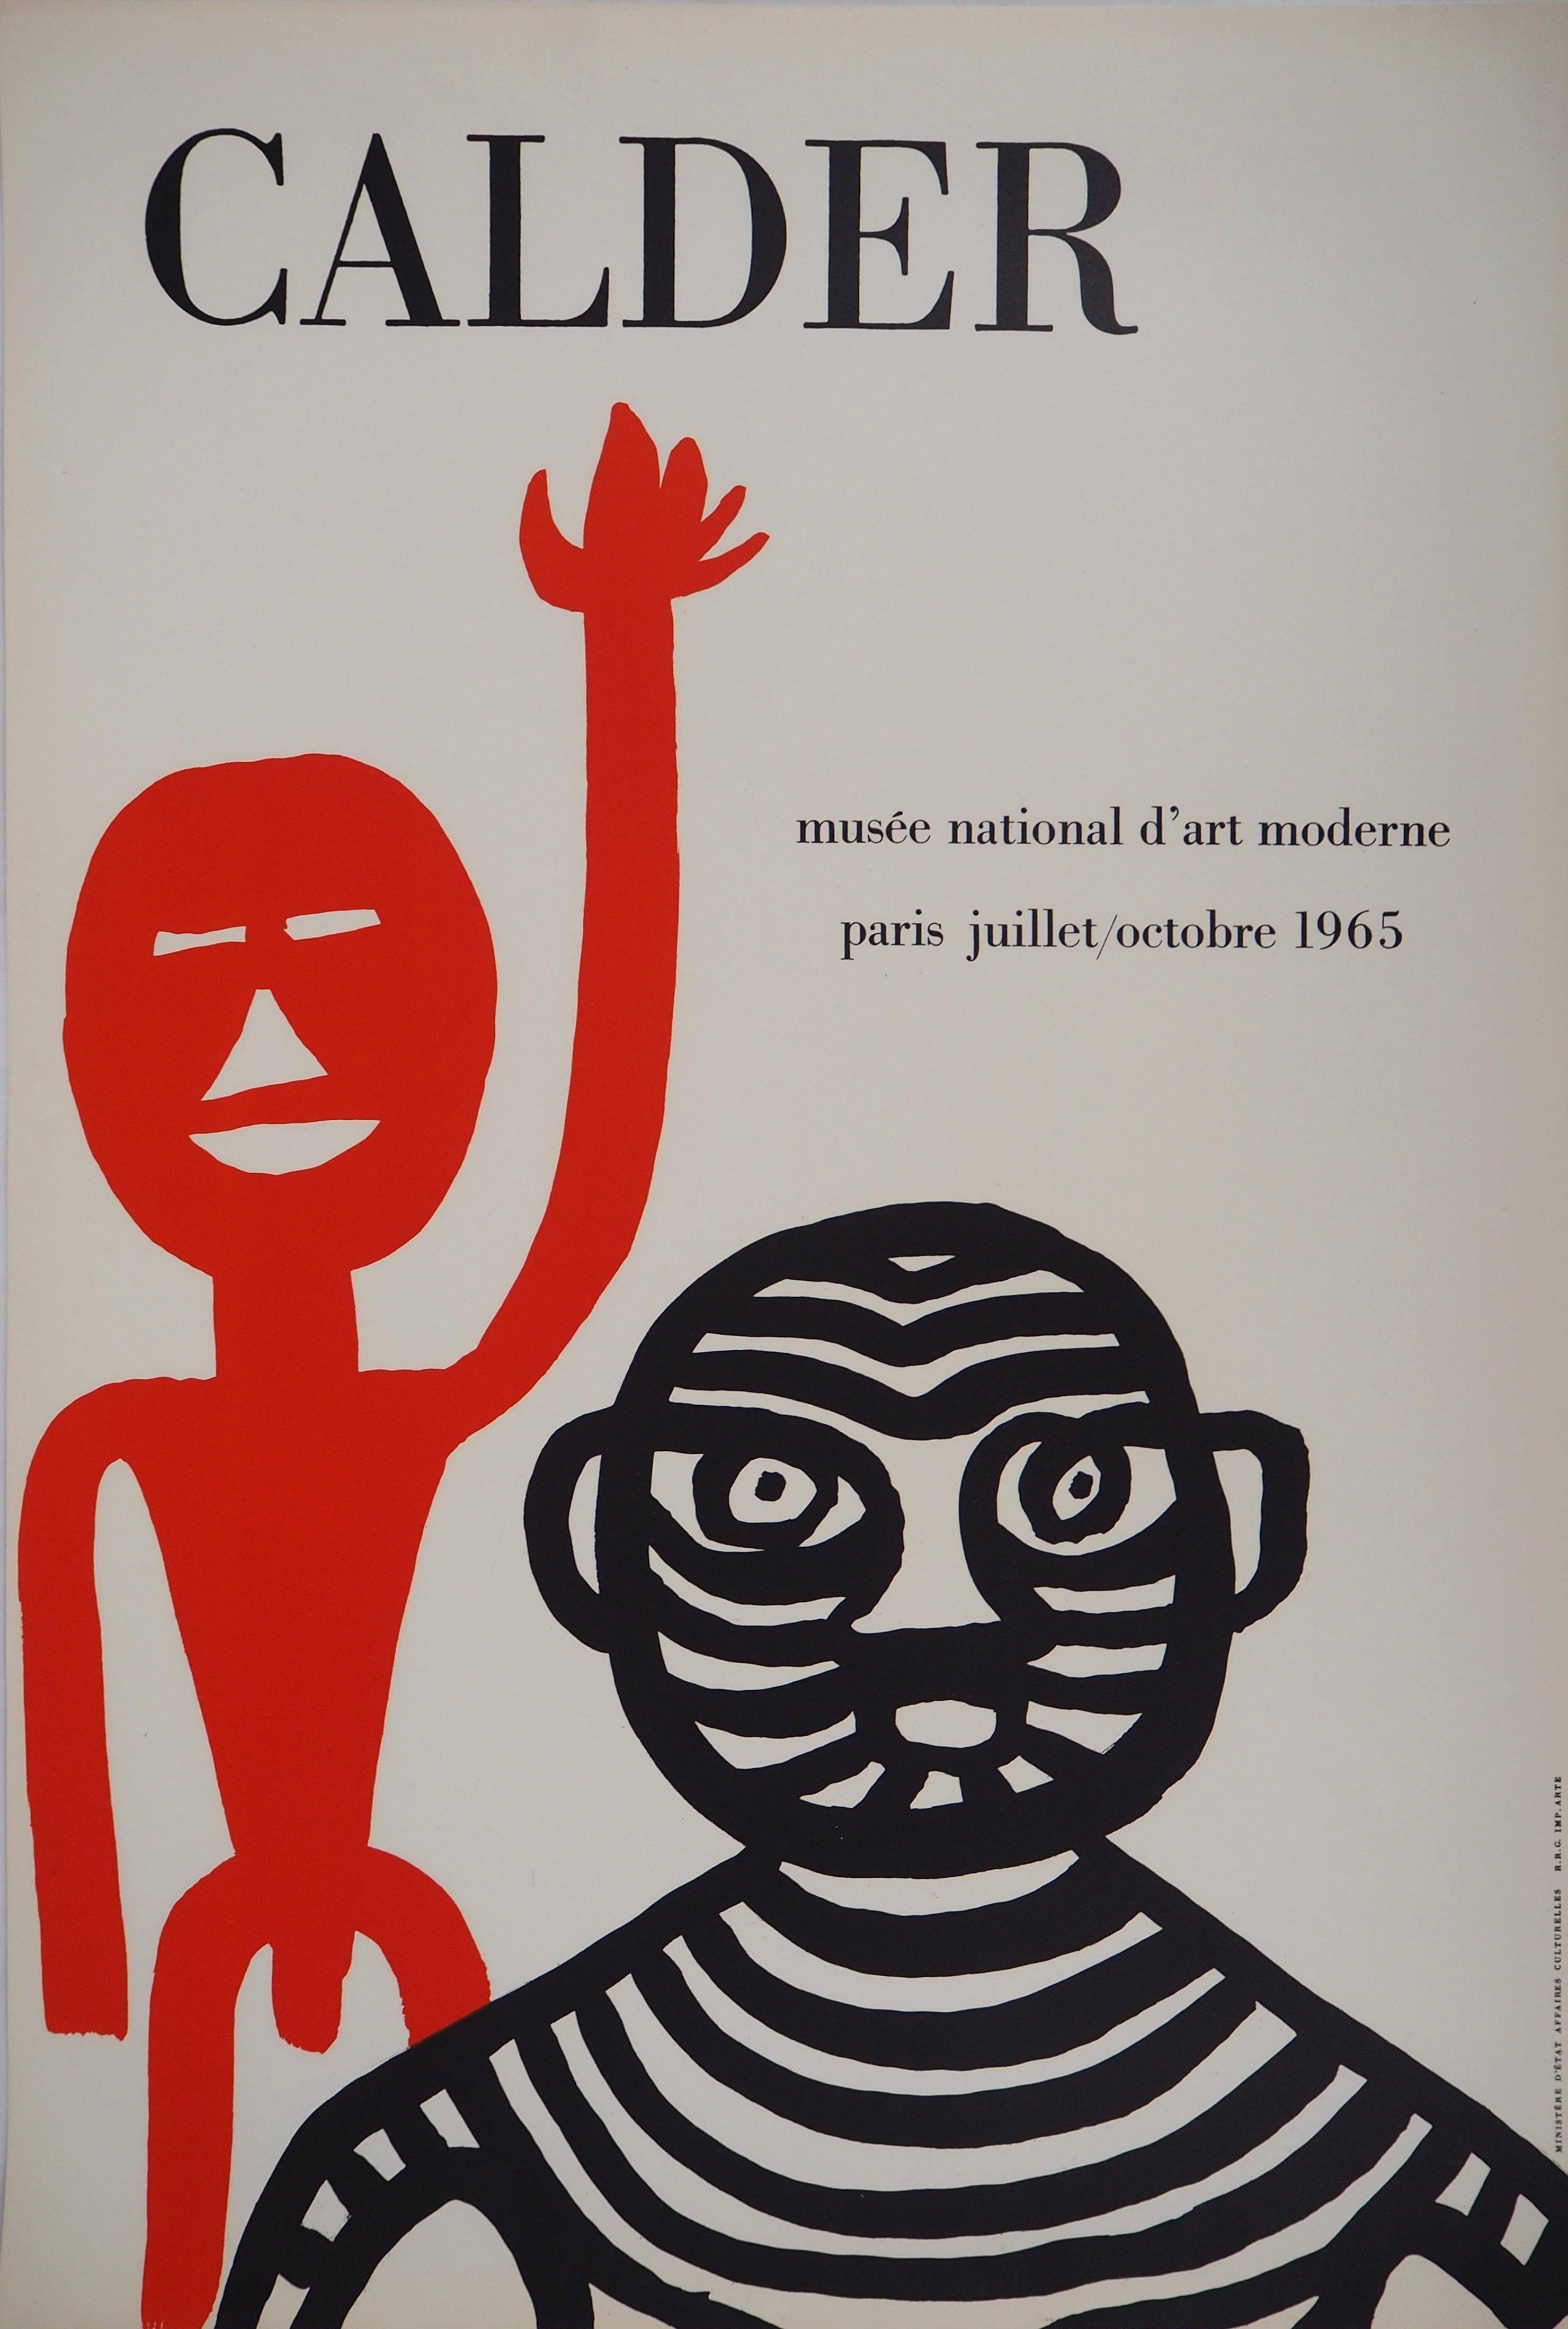 Alexander Calder Portrait Print - Tiger Man and Red Man Exhibition Poster, 1965